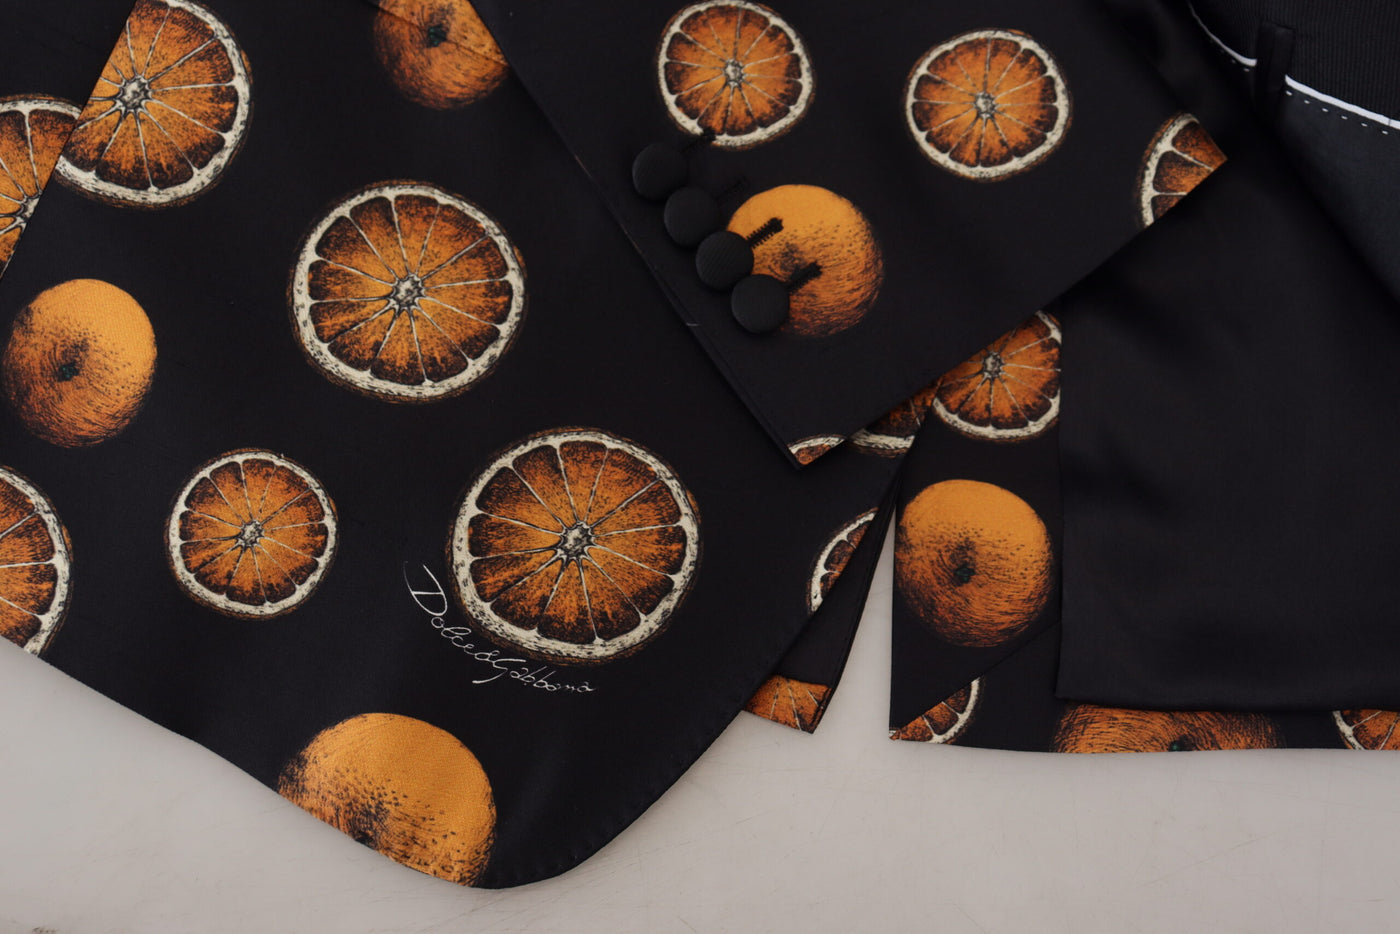 Dolce & Gabbana Black Orange Printed Coat Martini Blazer